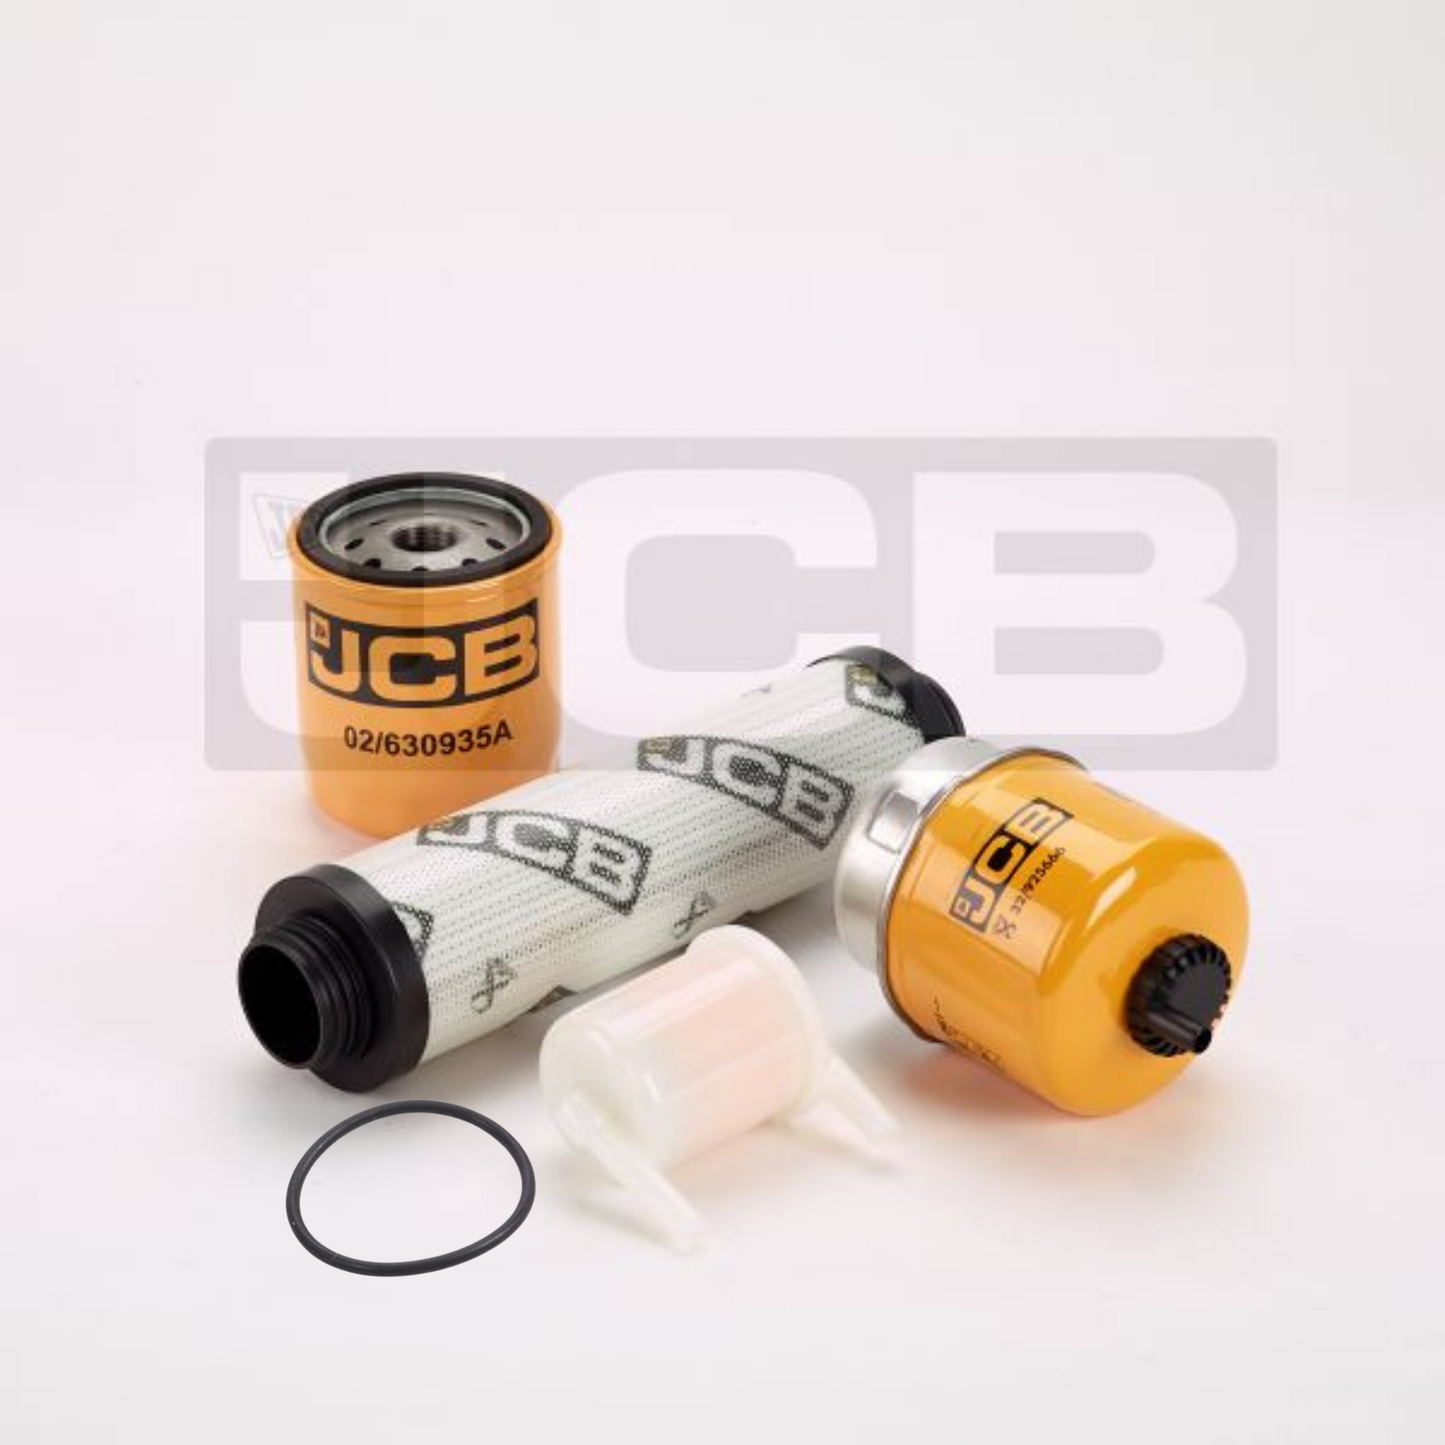 JCB 8025 & 8026: 5500 Hour Service Filter Kit